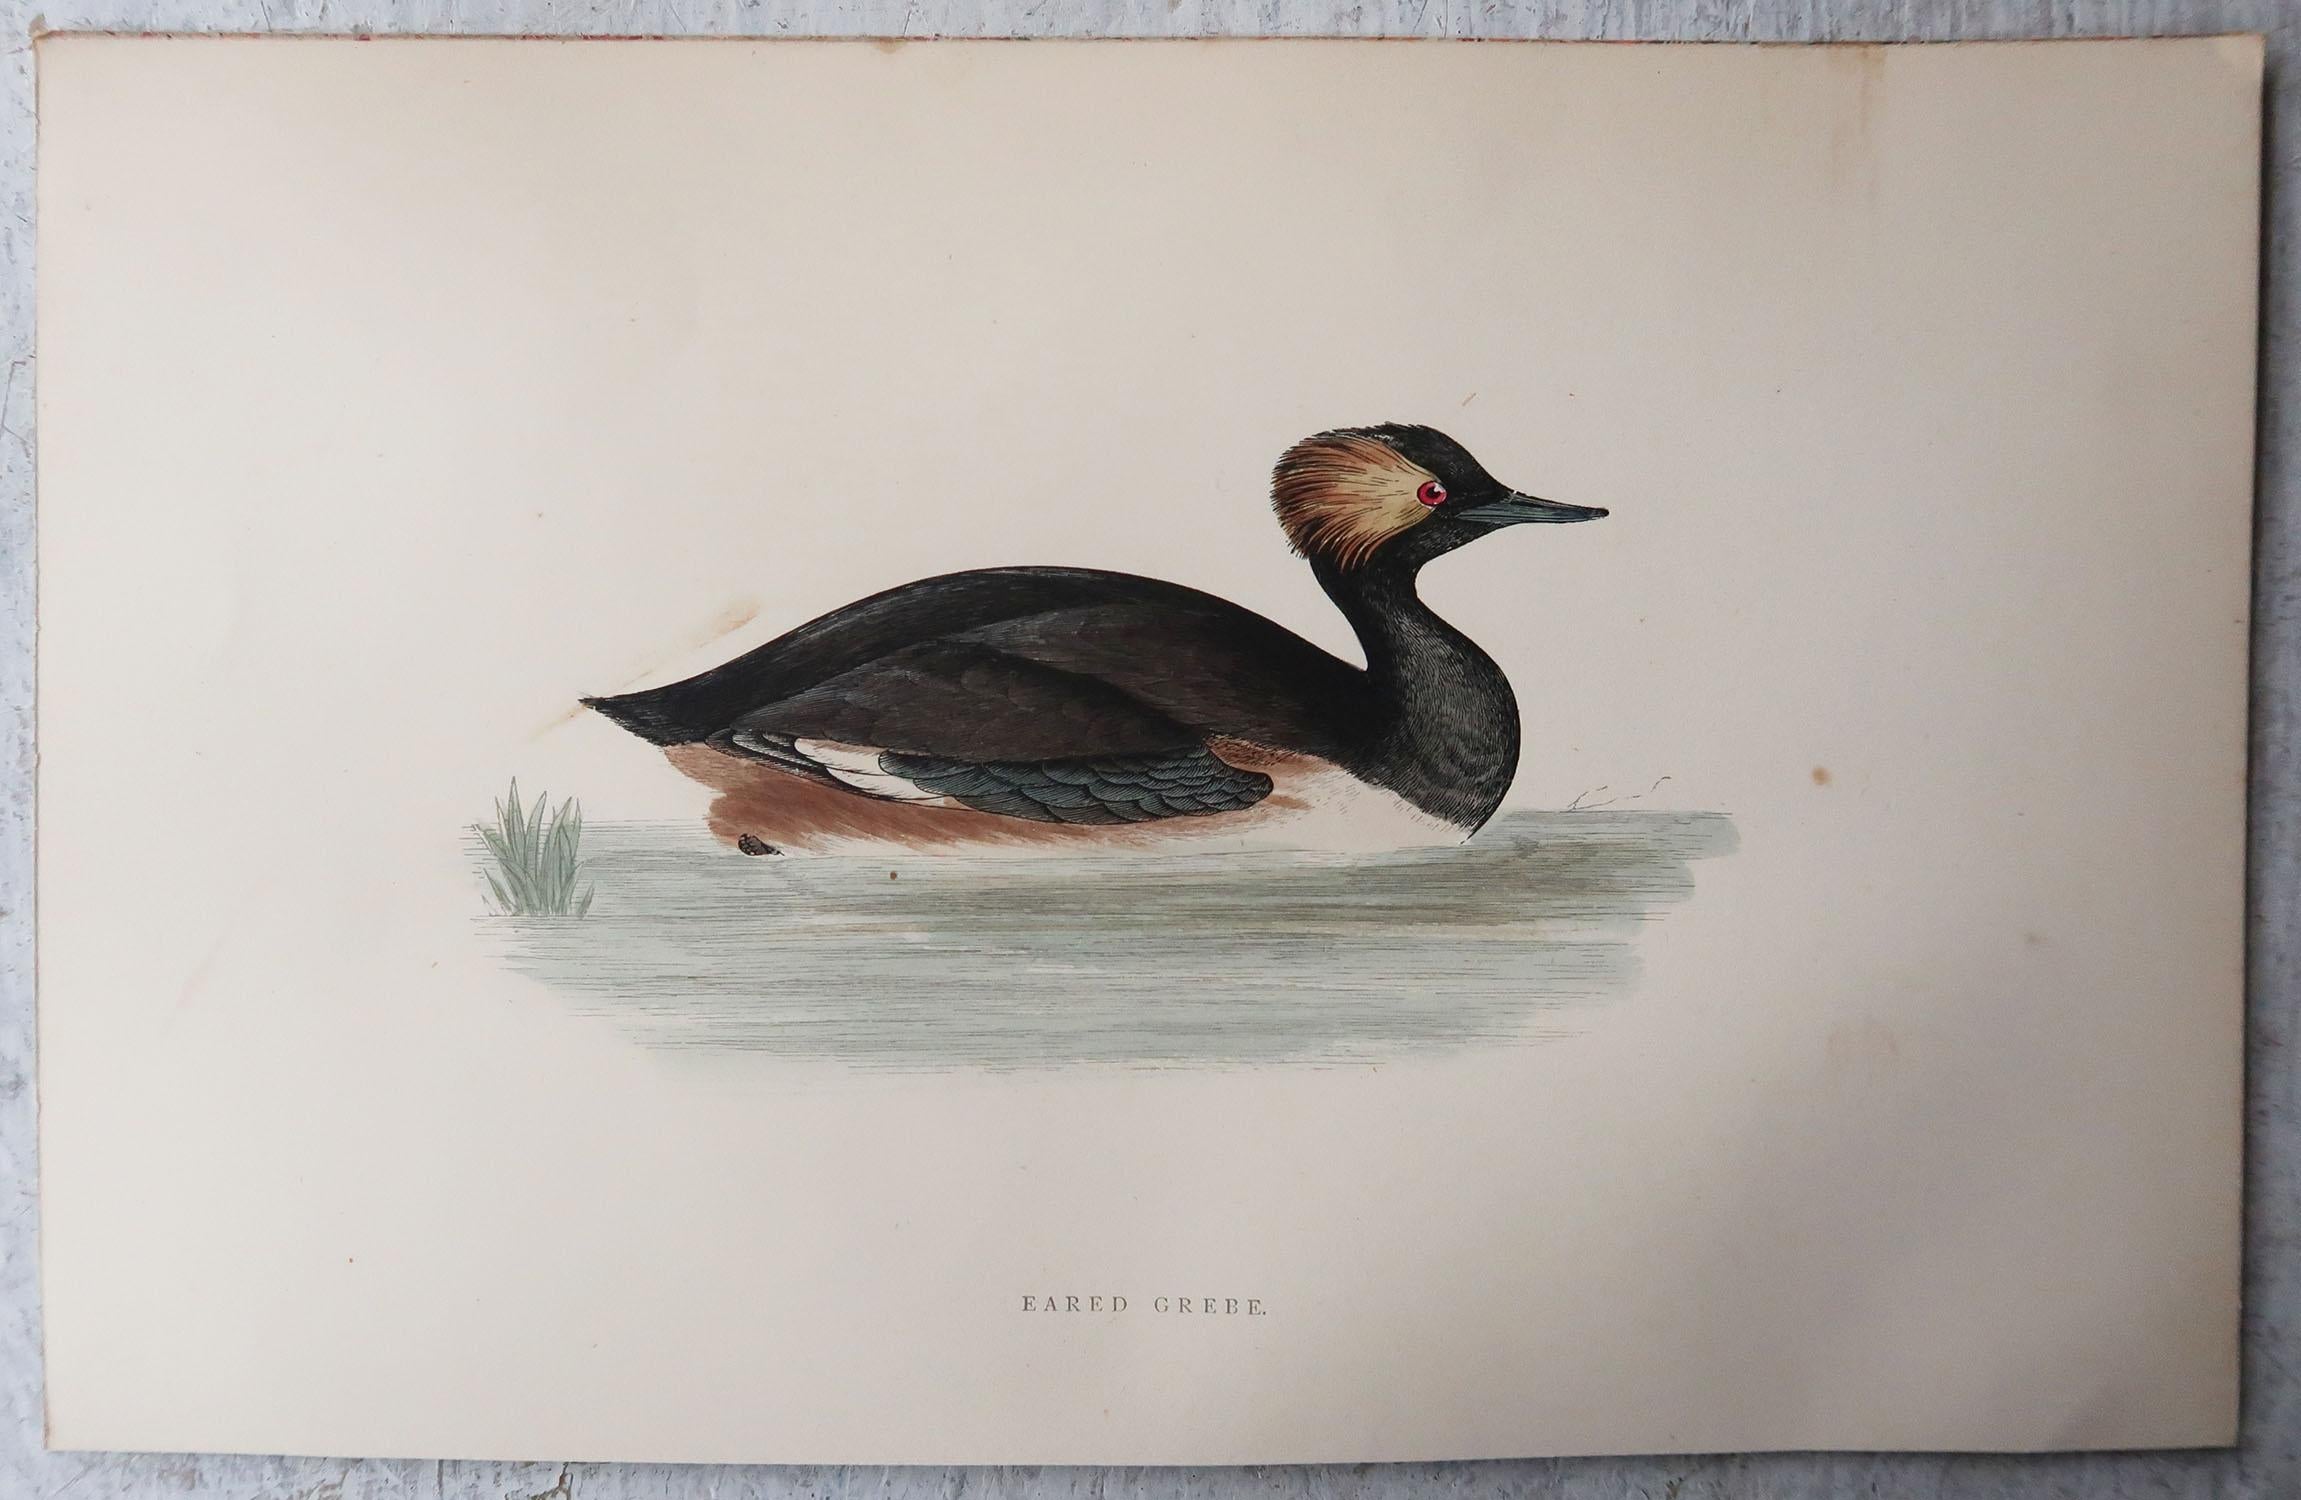 Other Set of 10 Original Antique Prints of Ducks After Francis Lydon, C.1880